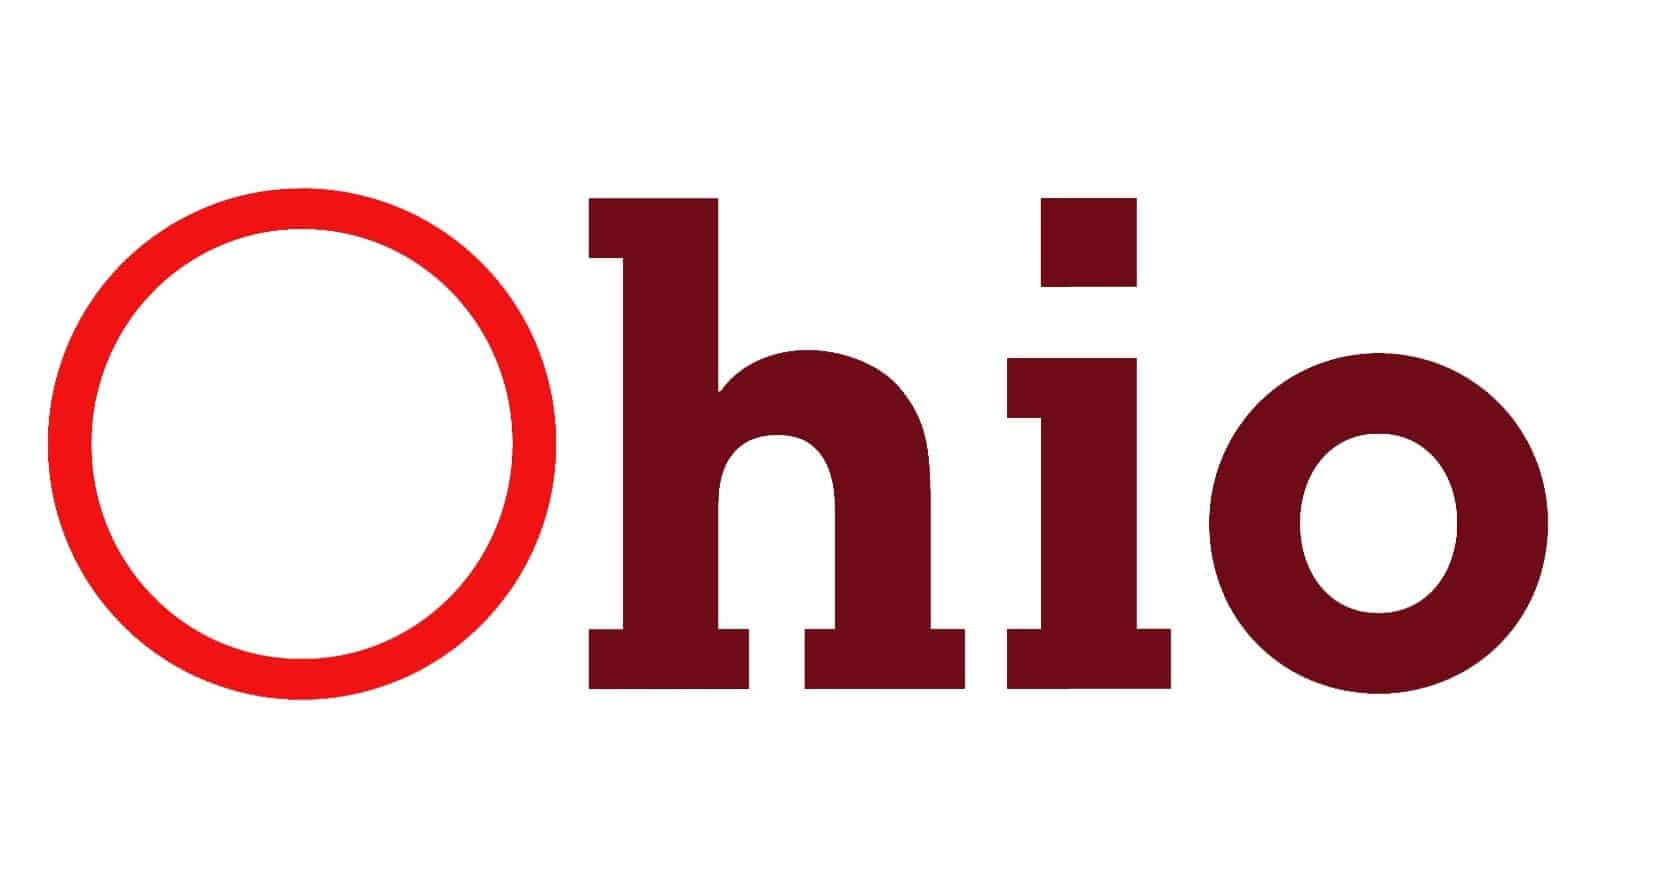 O pais. Надпись Odh. Oh logo. Ohio script.